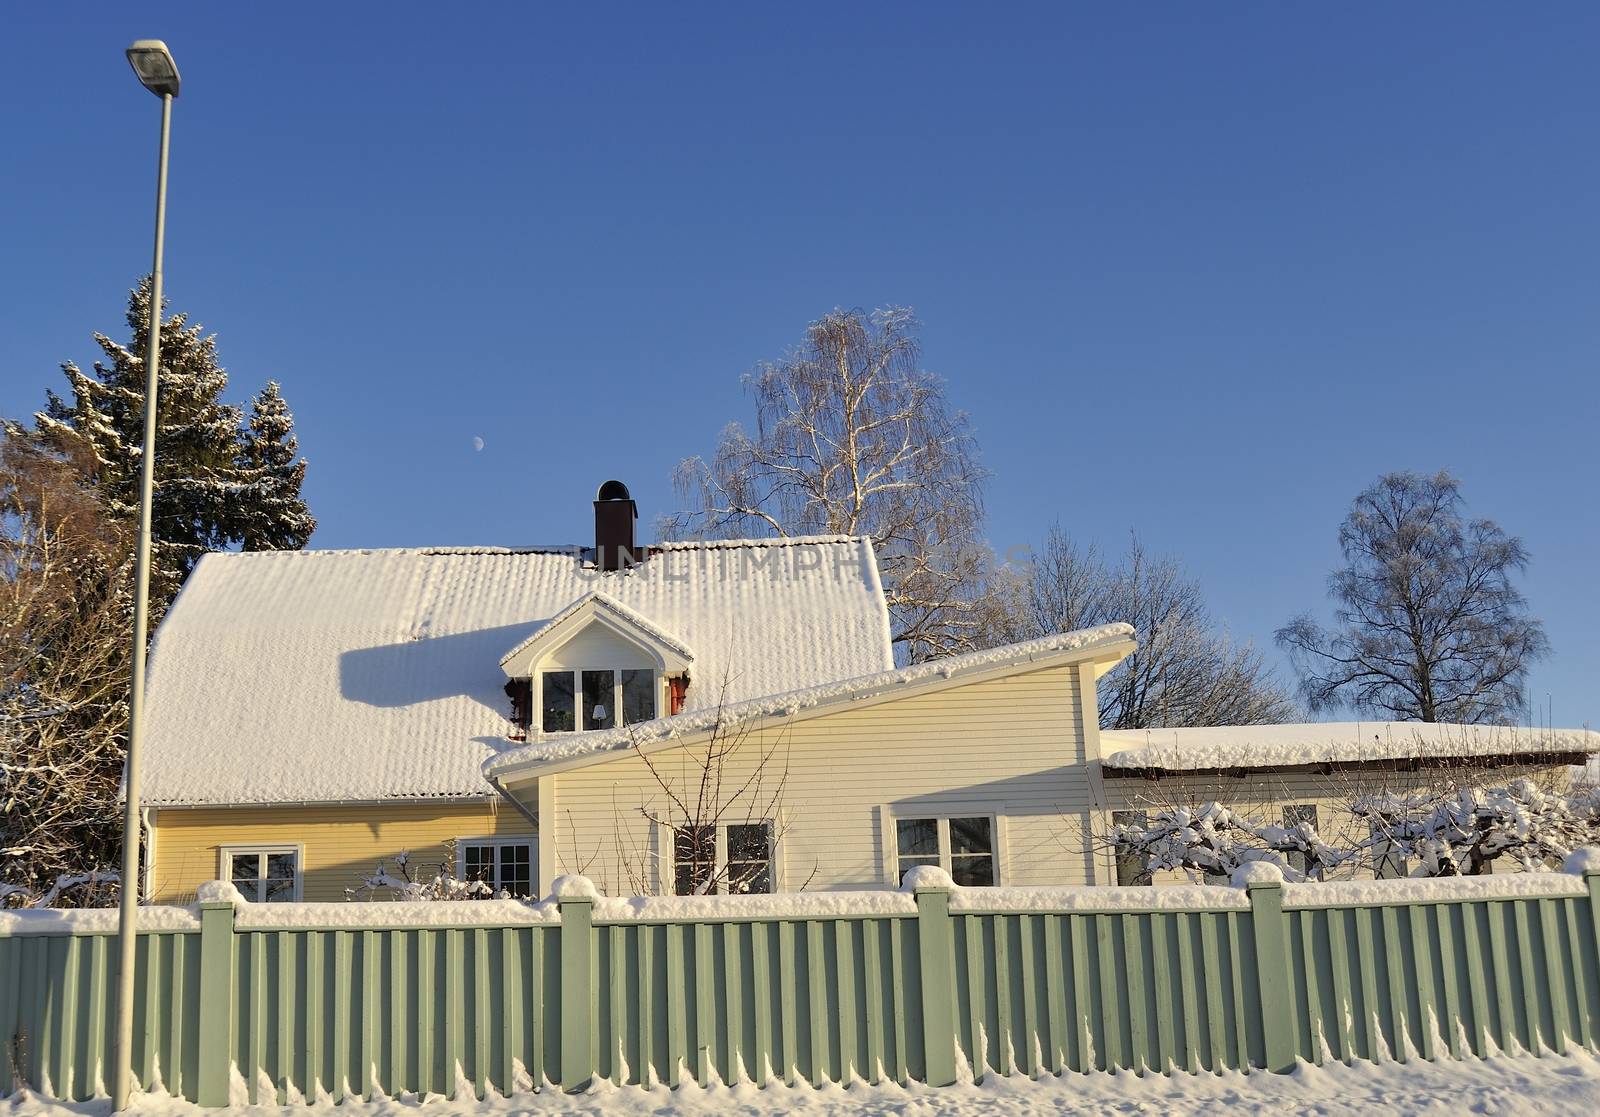 Swedish housing by a40757